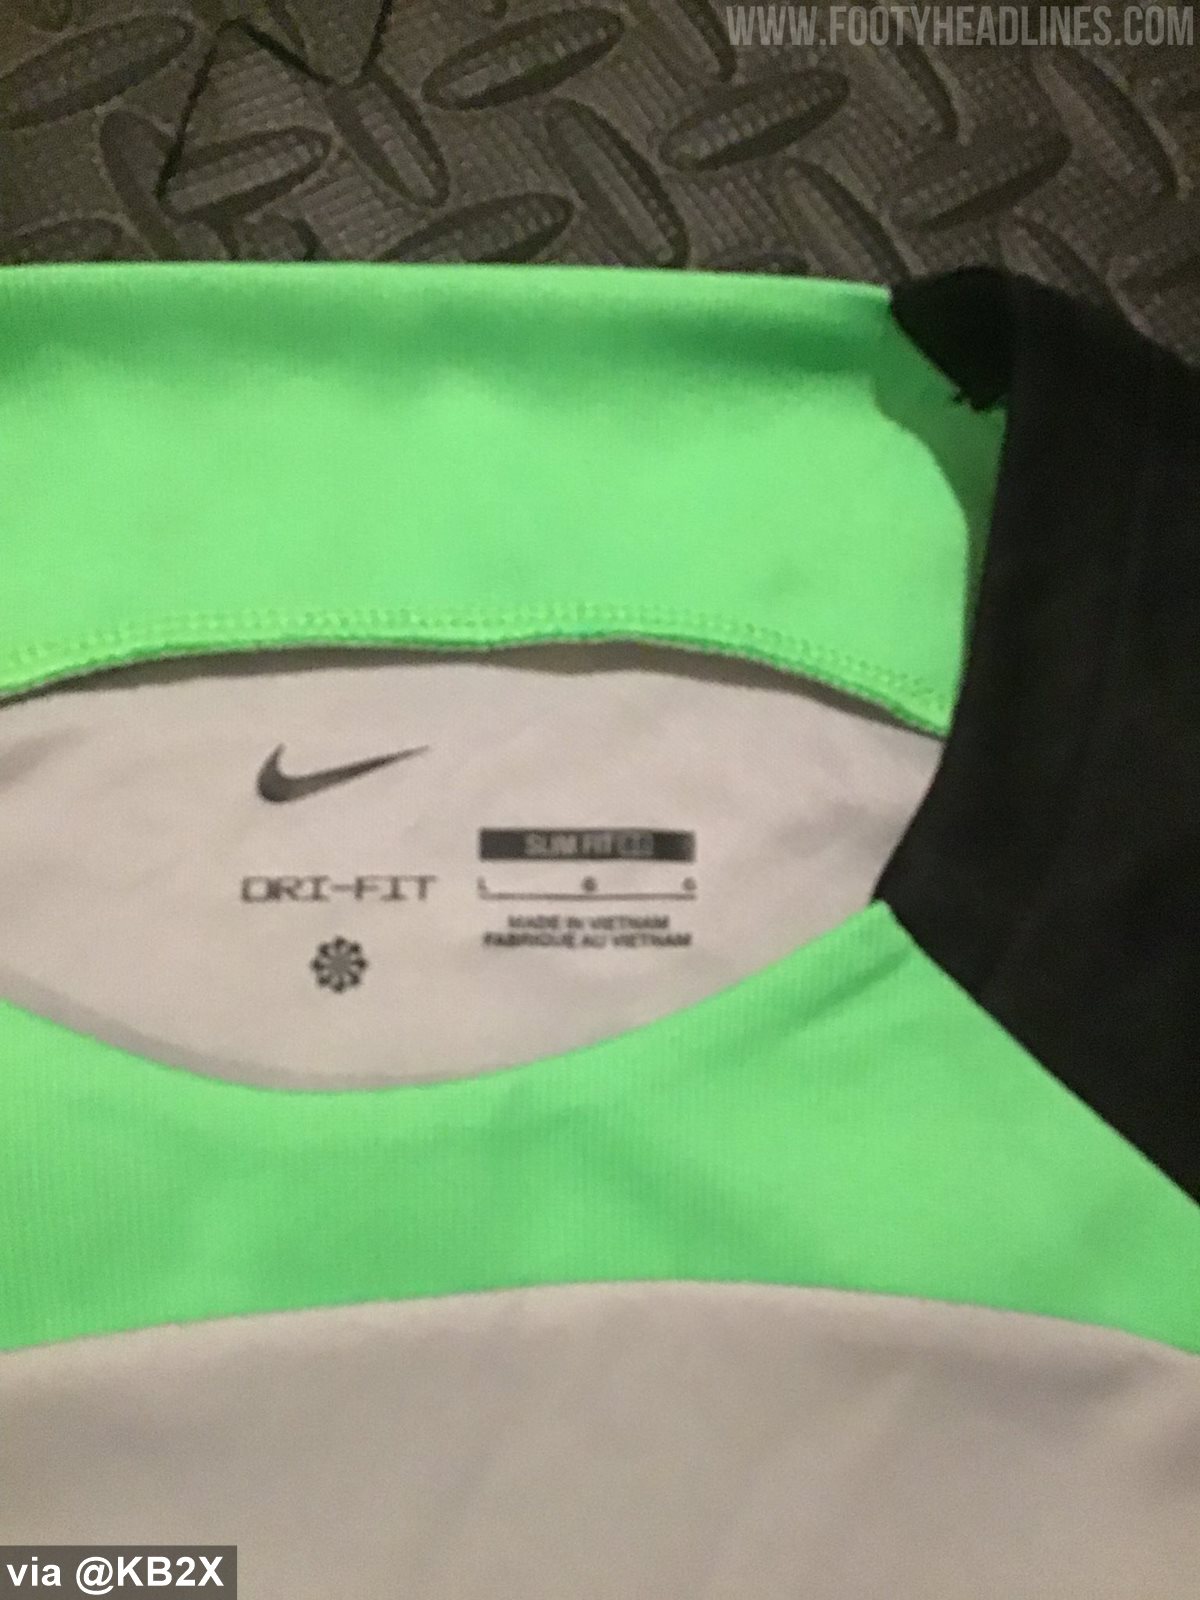 Nike Launch New Liverpool 2023 Training & Prematch Range - SoccerBible